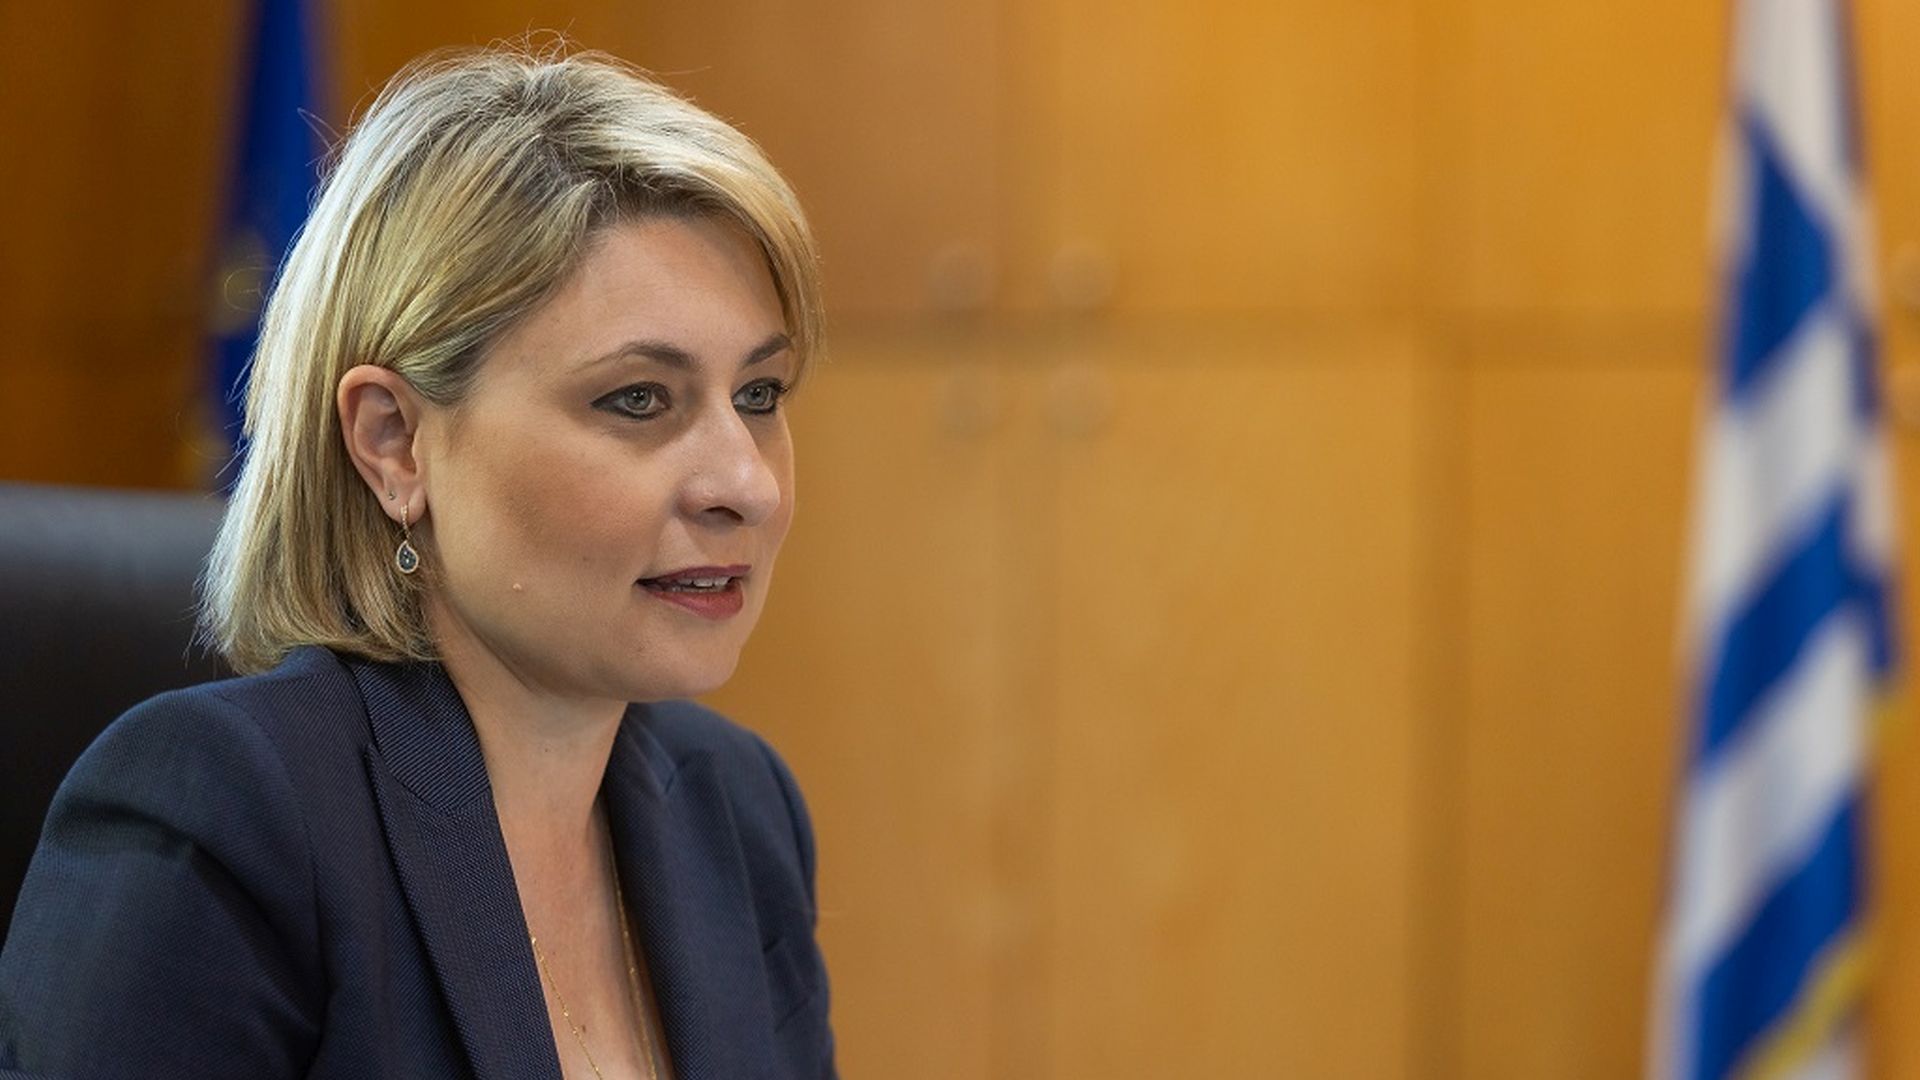 H Χριστίνα Αλεξοπούλου, Υφυπουργός Υποδομών και Μεταφορών αρμόδια για τις Μεταφορές